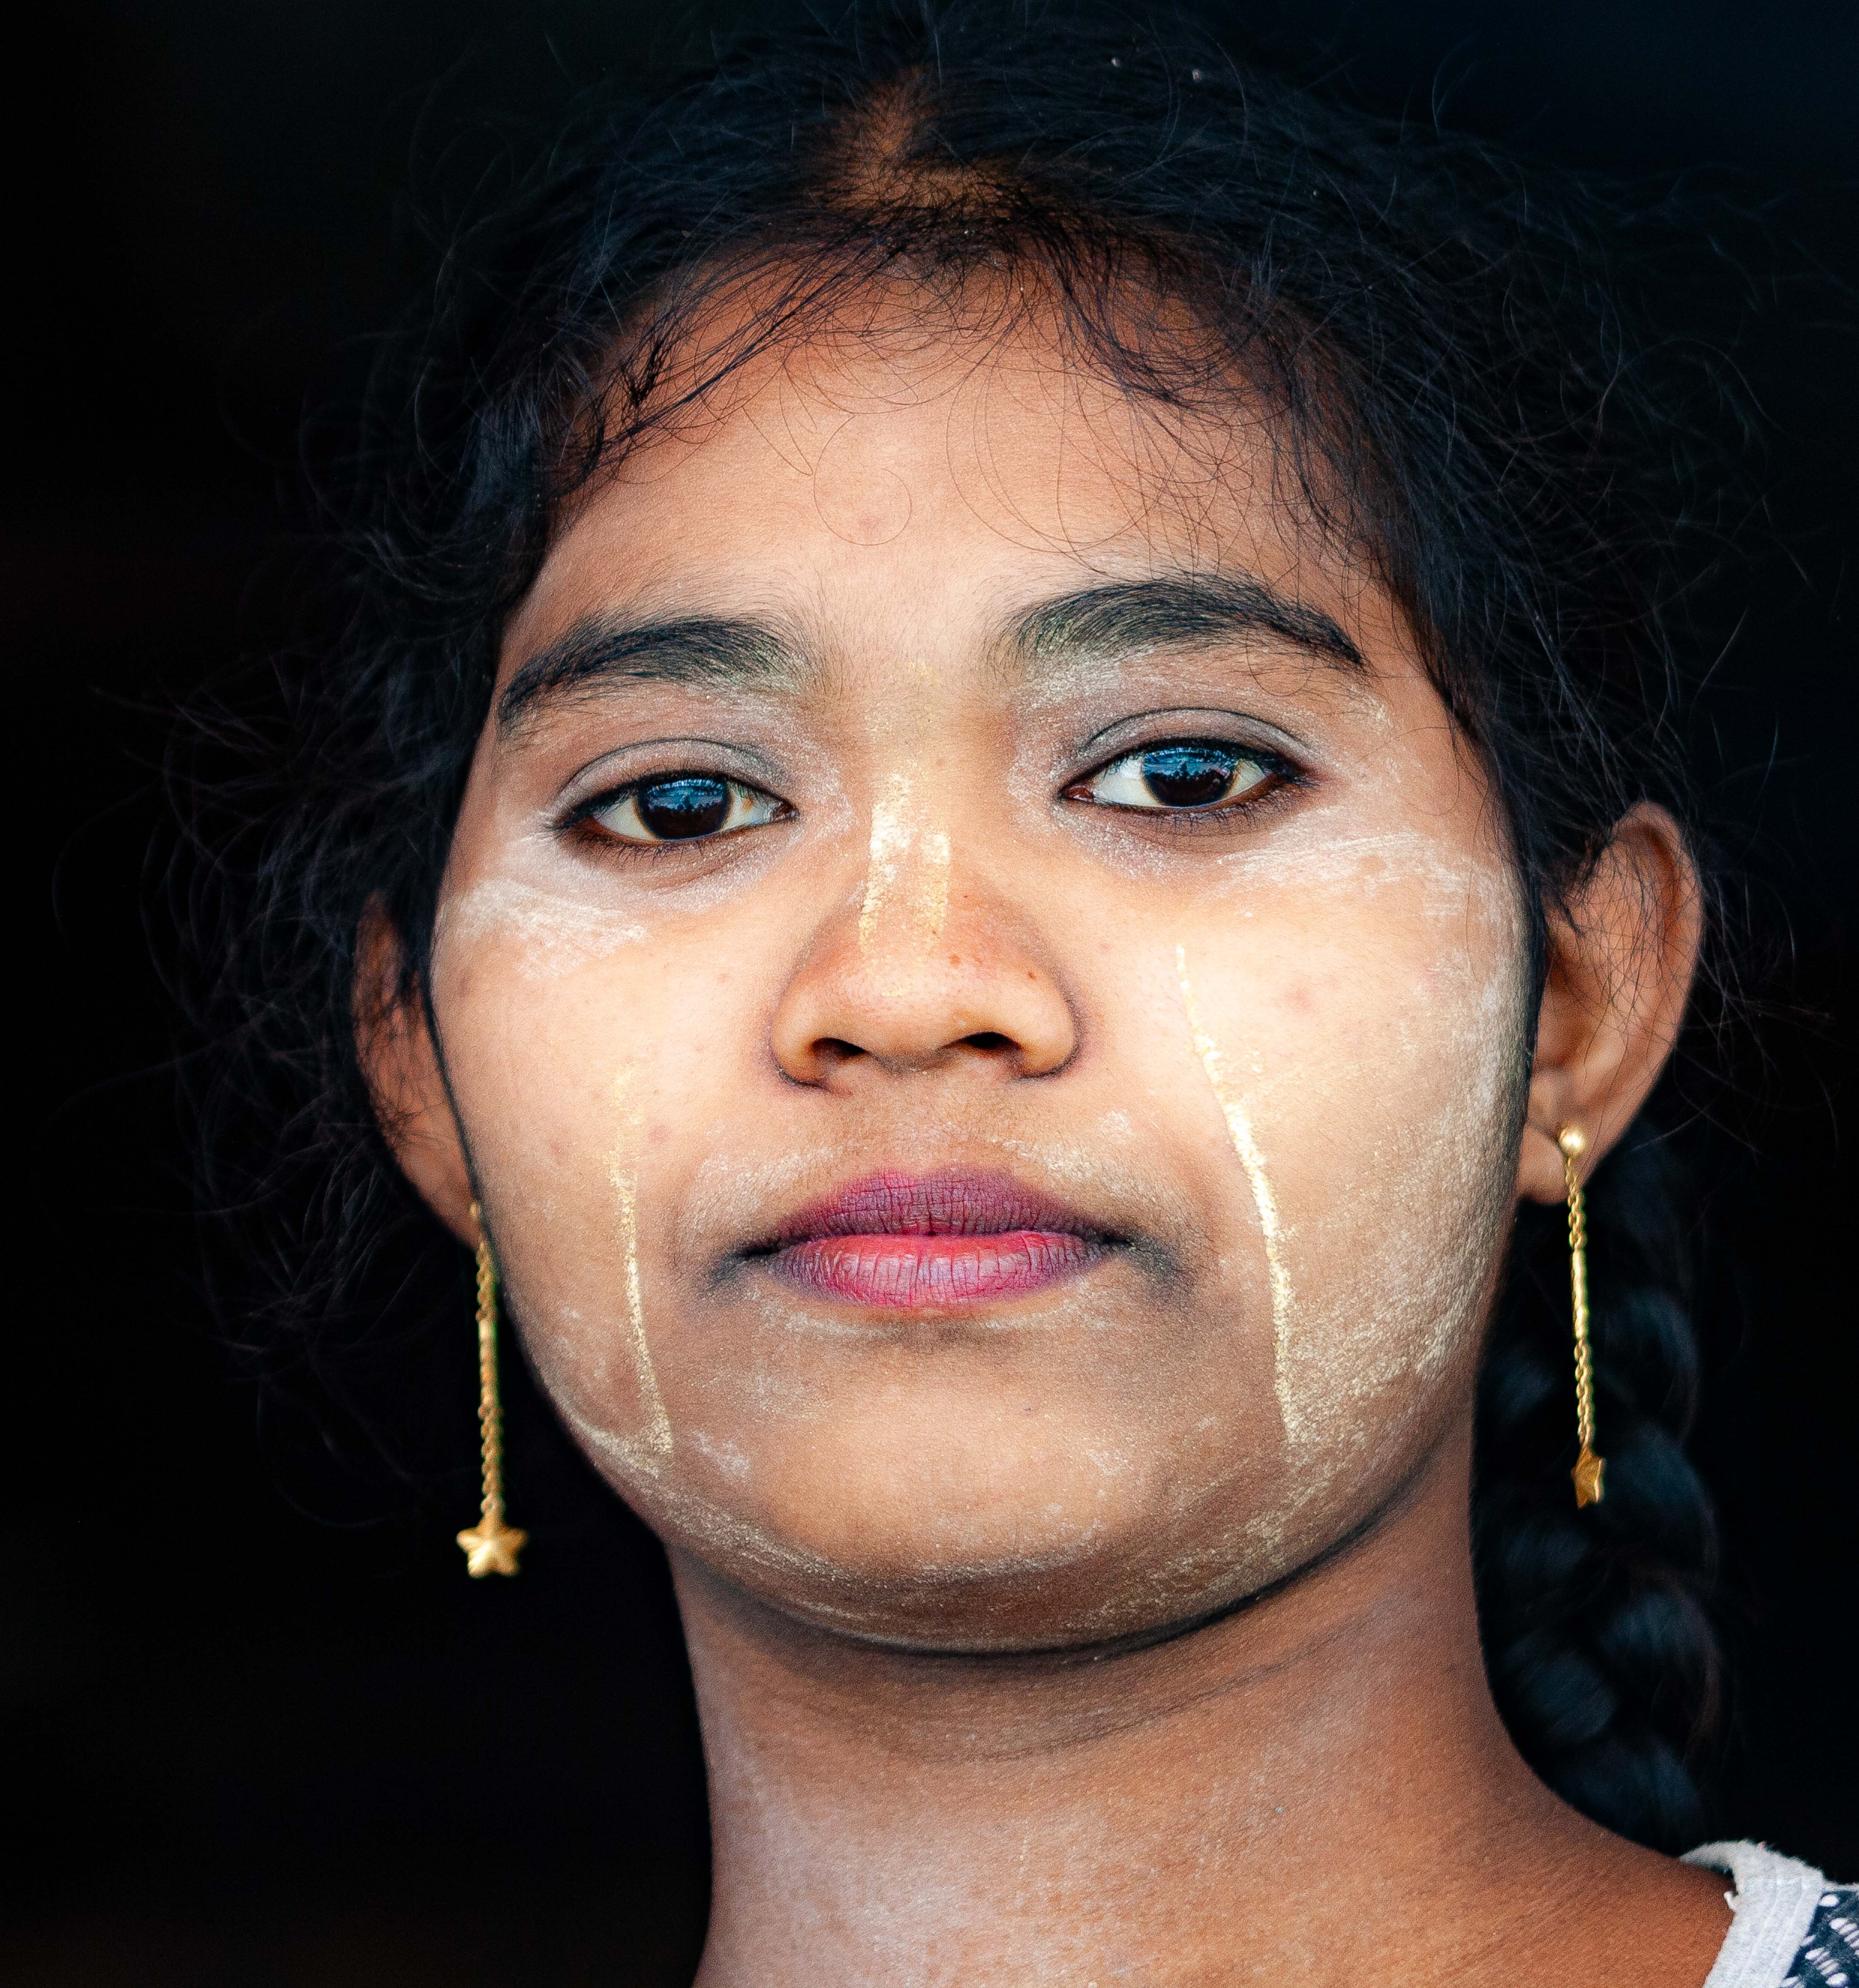 Myanmar, Tanintharyi Prov, Portrait Of A Woman, 2008, IMG 2726